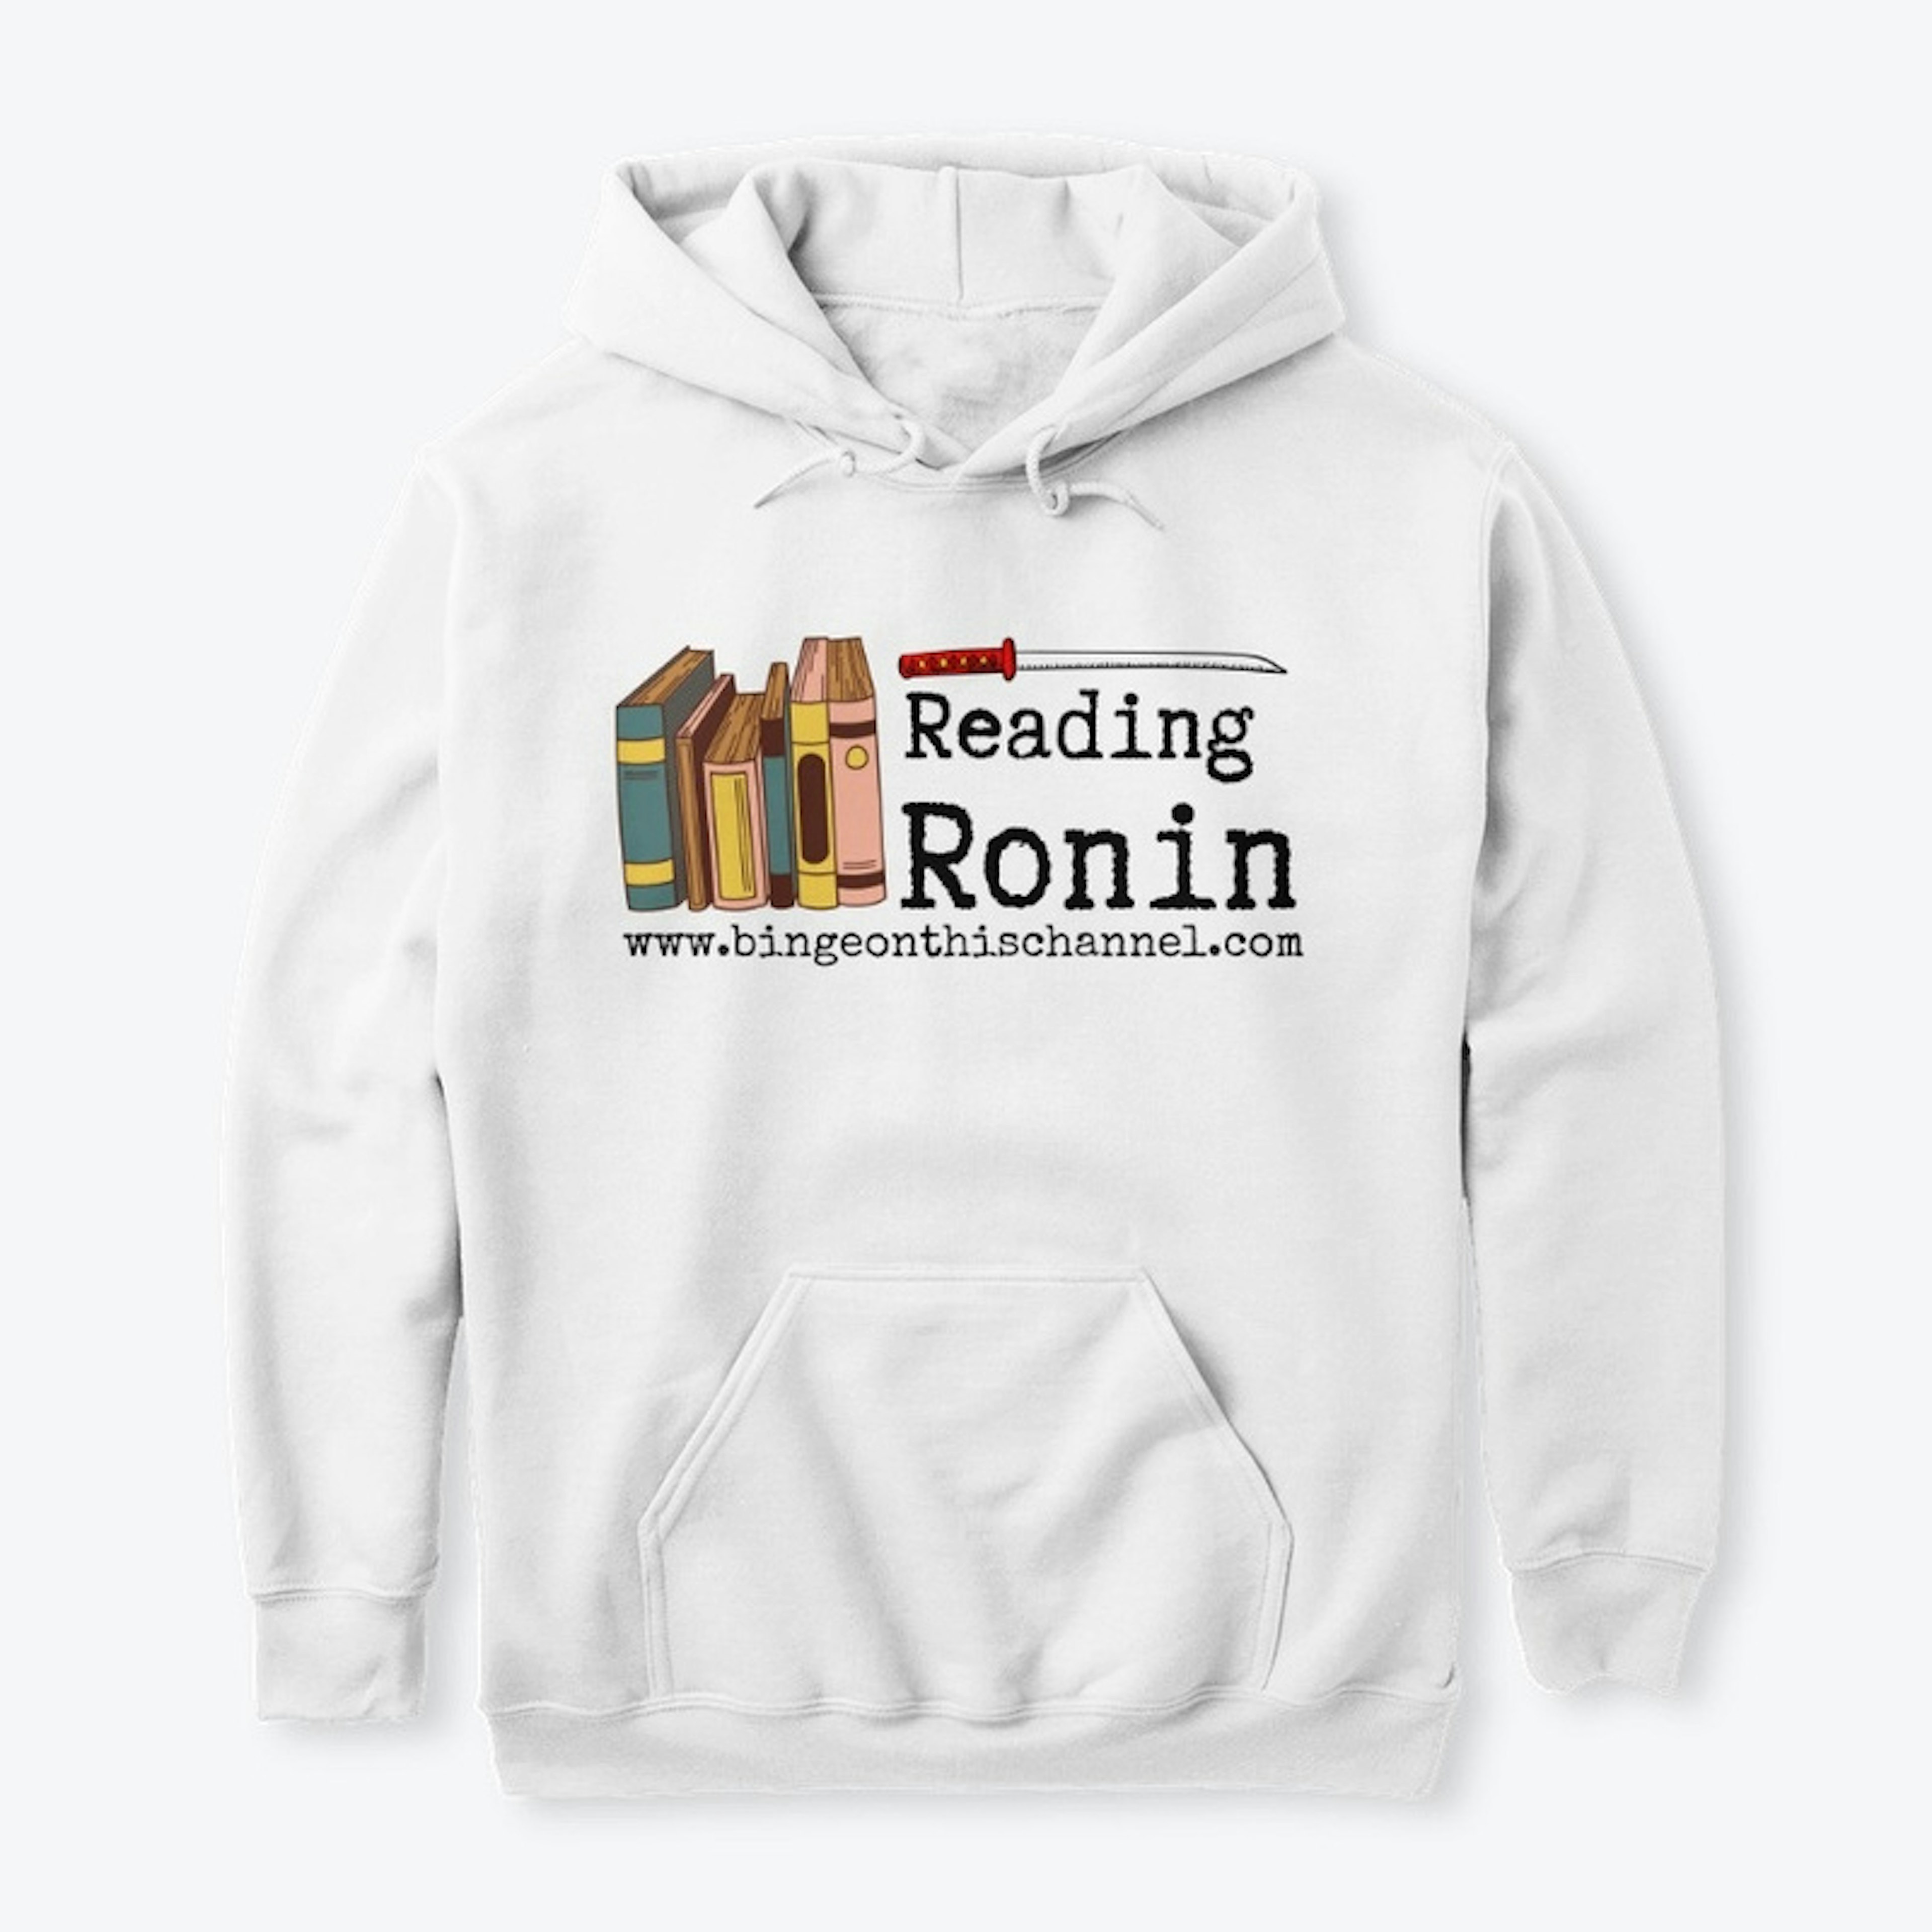 Reading Ronin book sword logo